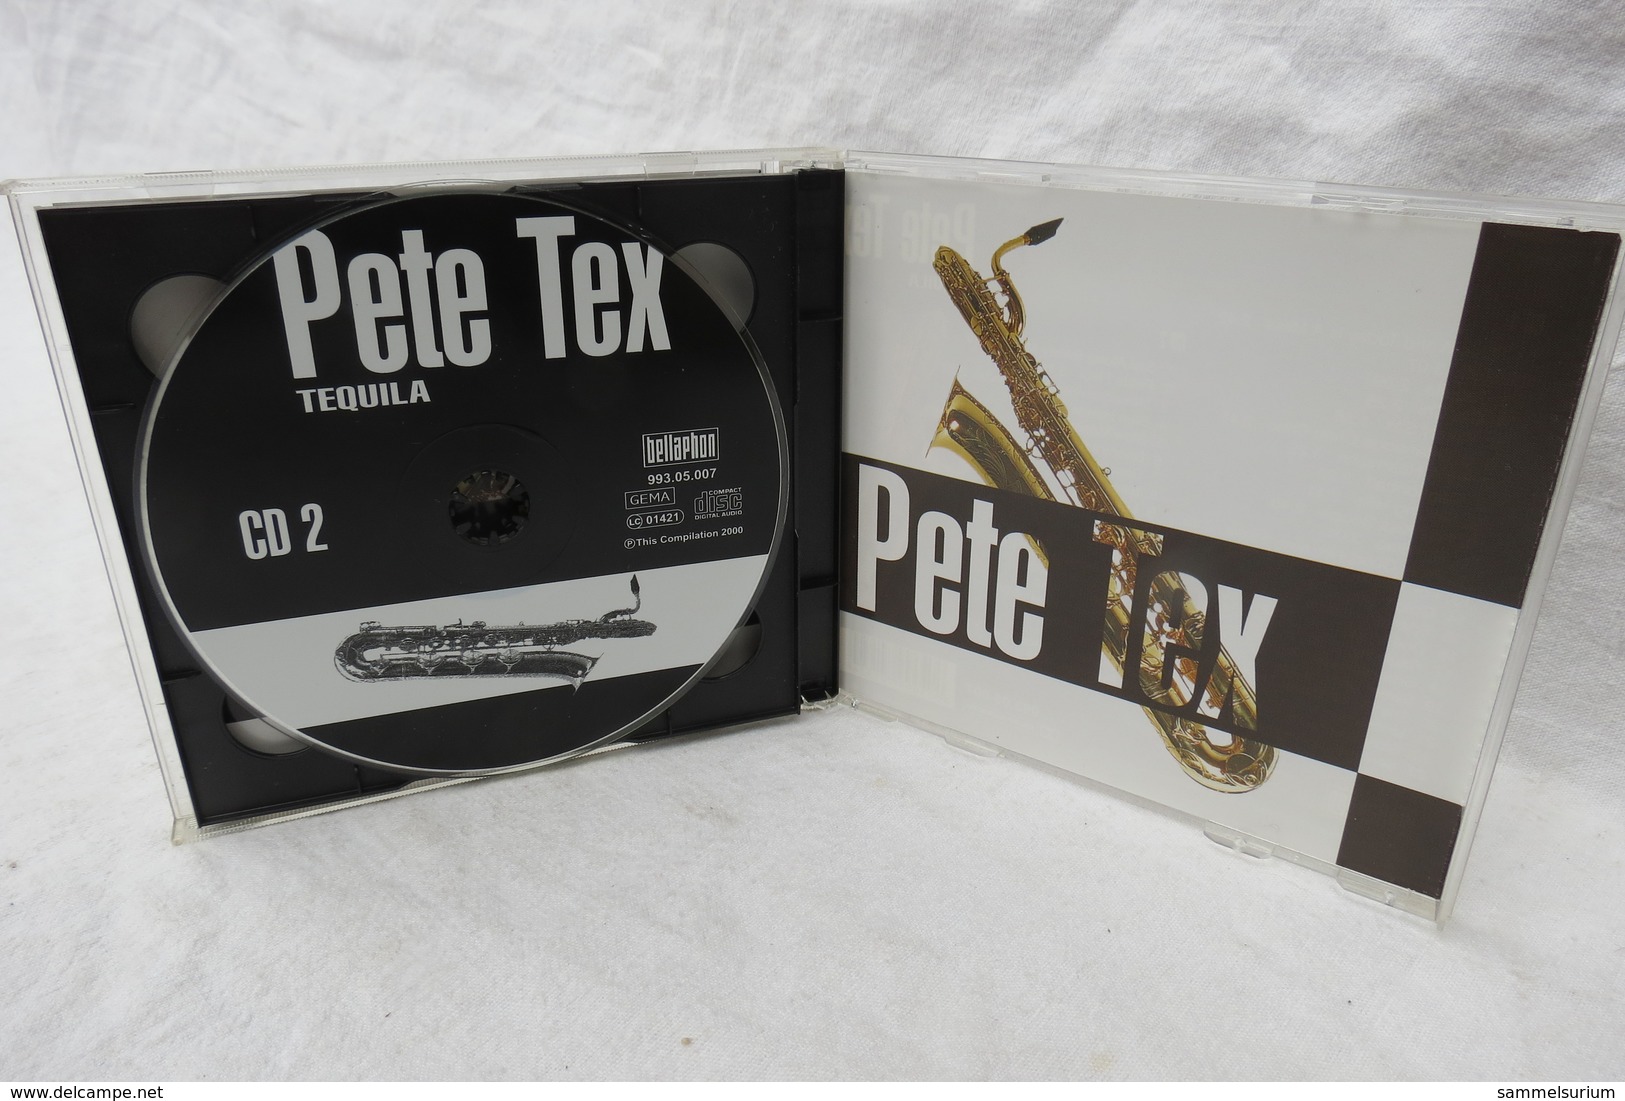 2 CDs "Pete Tex" Tequila - Strumentali